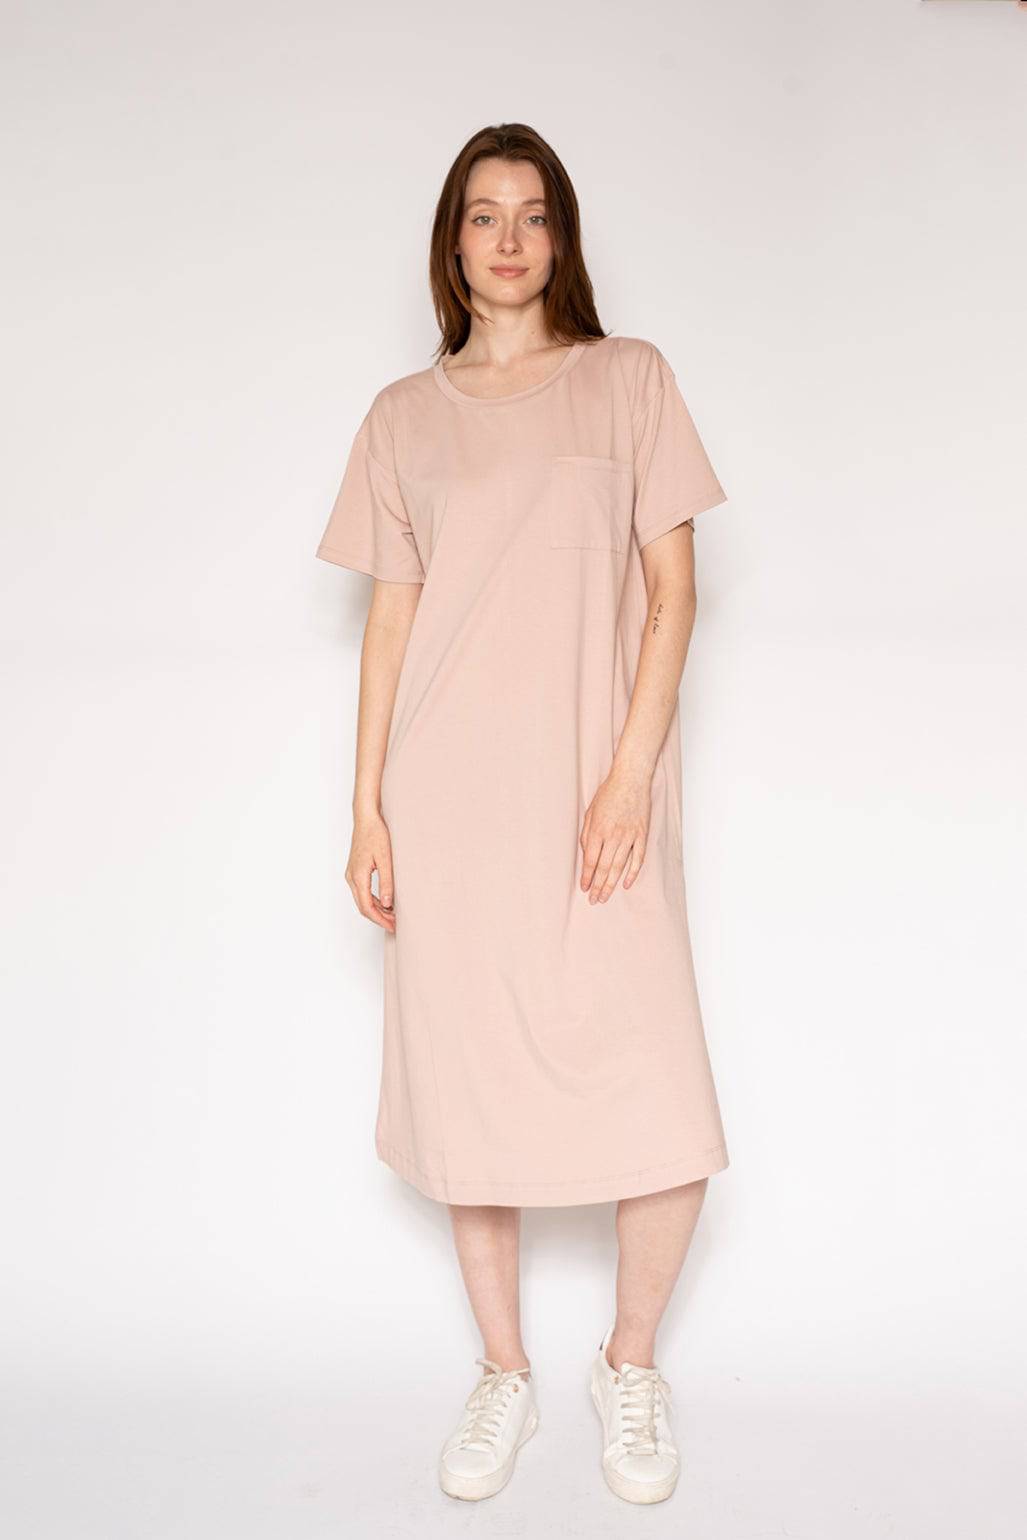 Midi Dress - Adobe Rose - LATTELOVE Co.